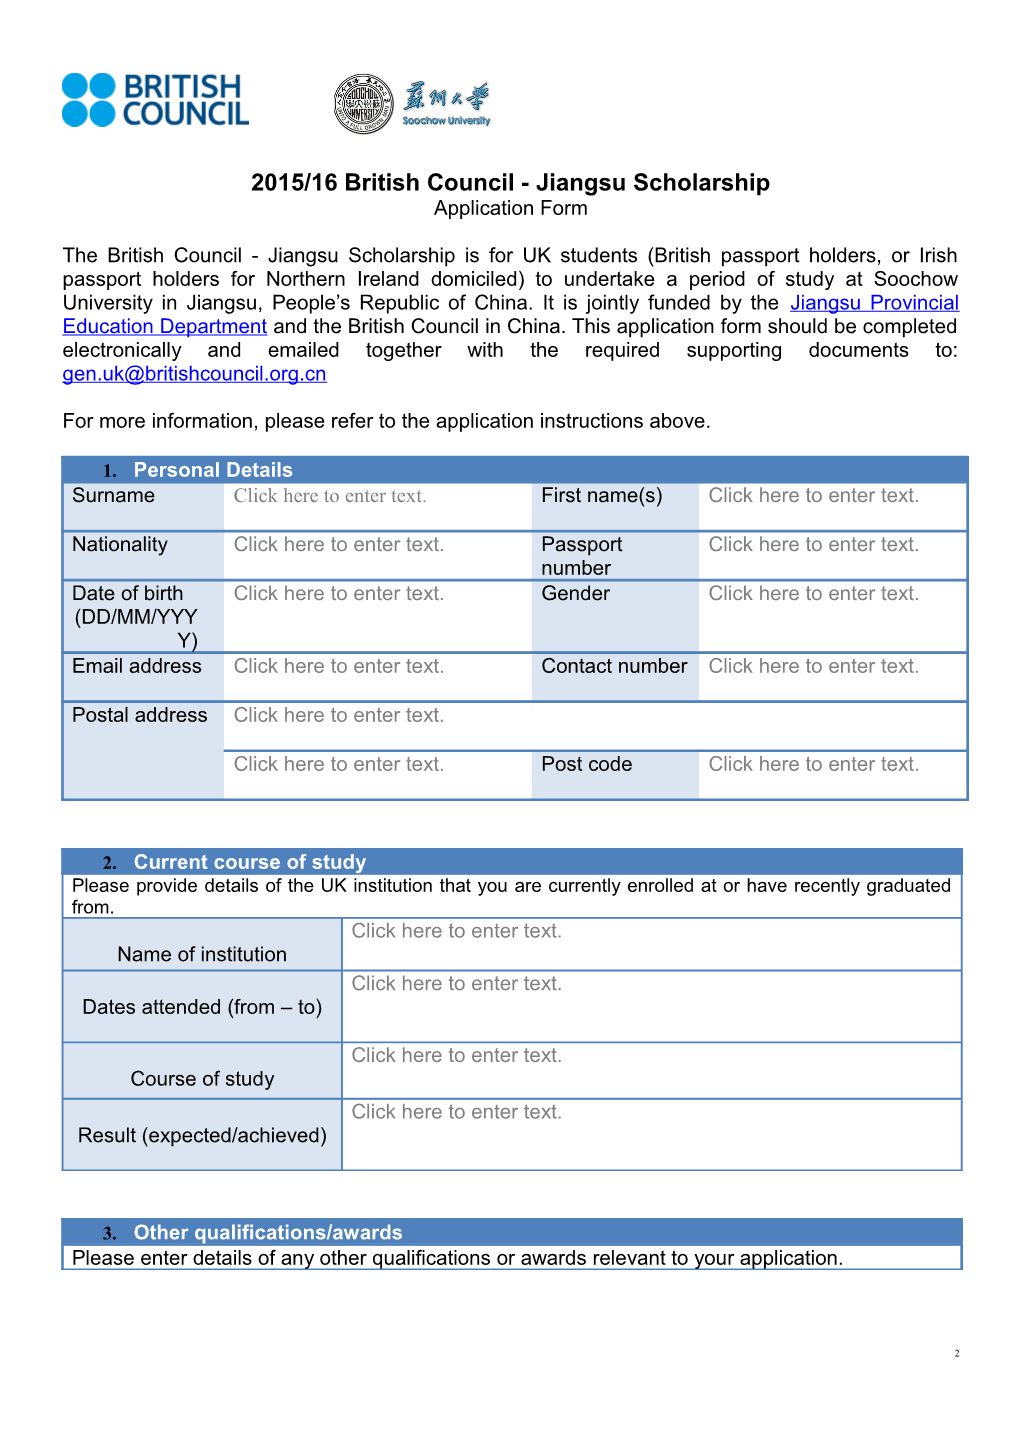 Application Instructions for the 2015/16 British Council - Jiangsu Scholarship